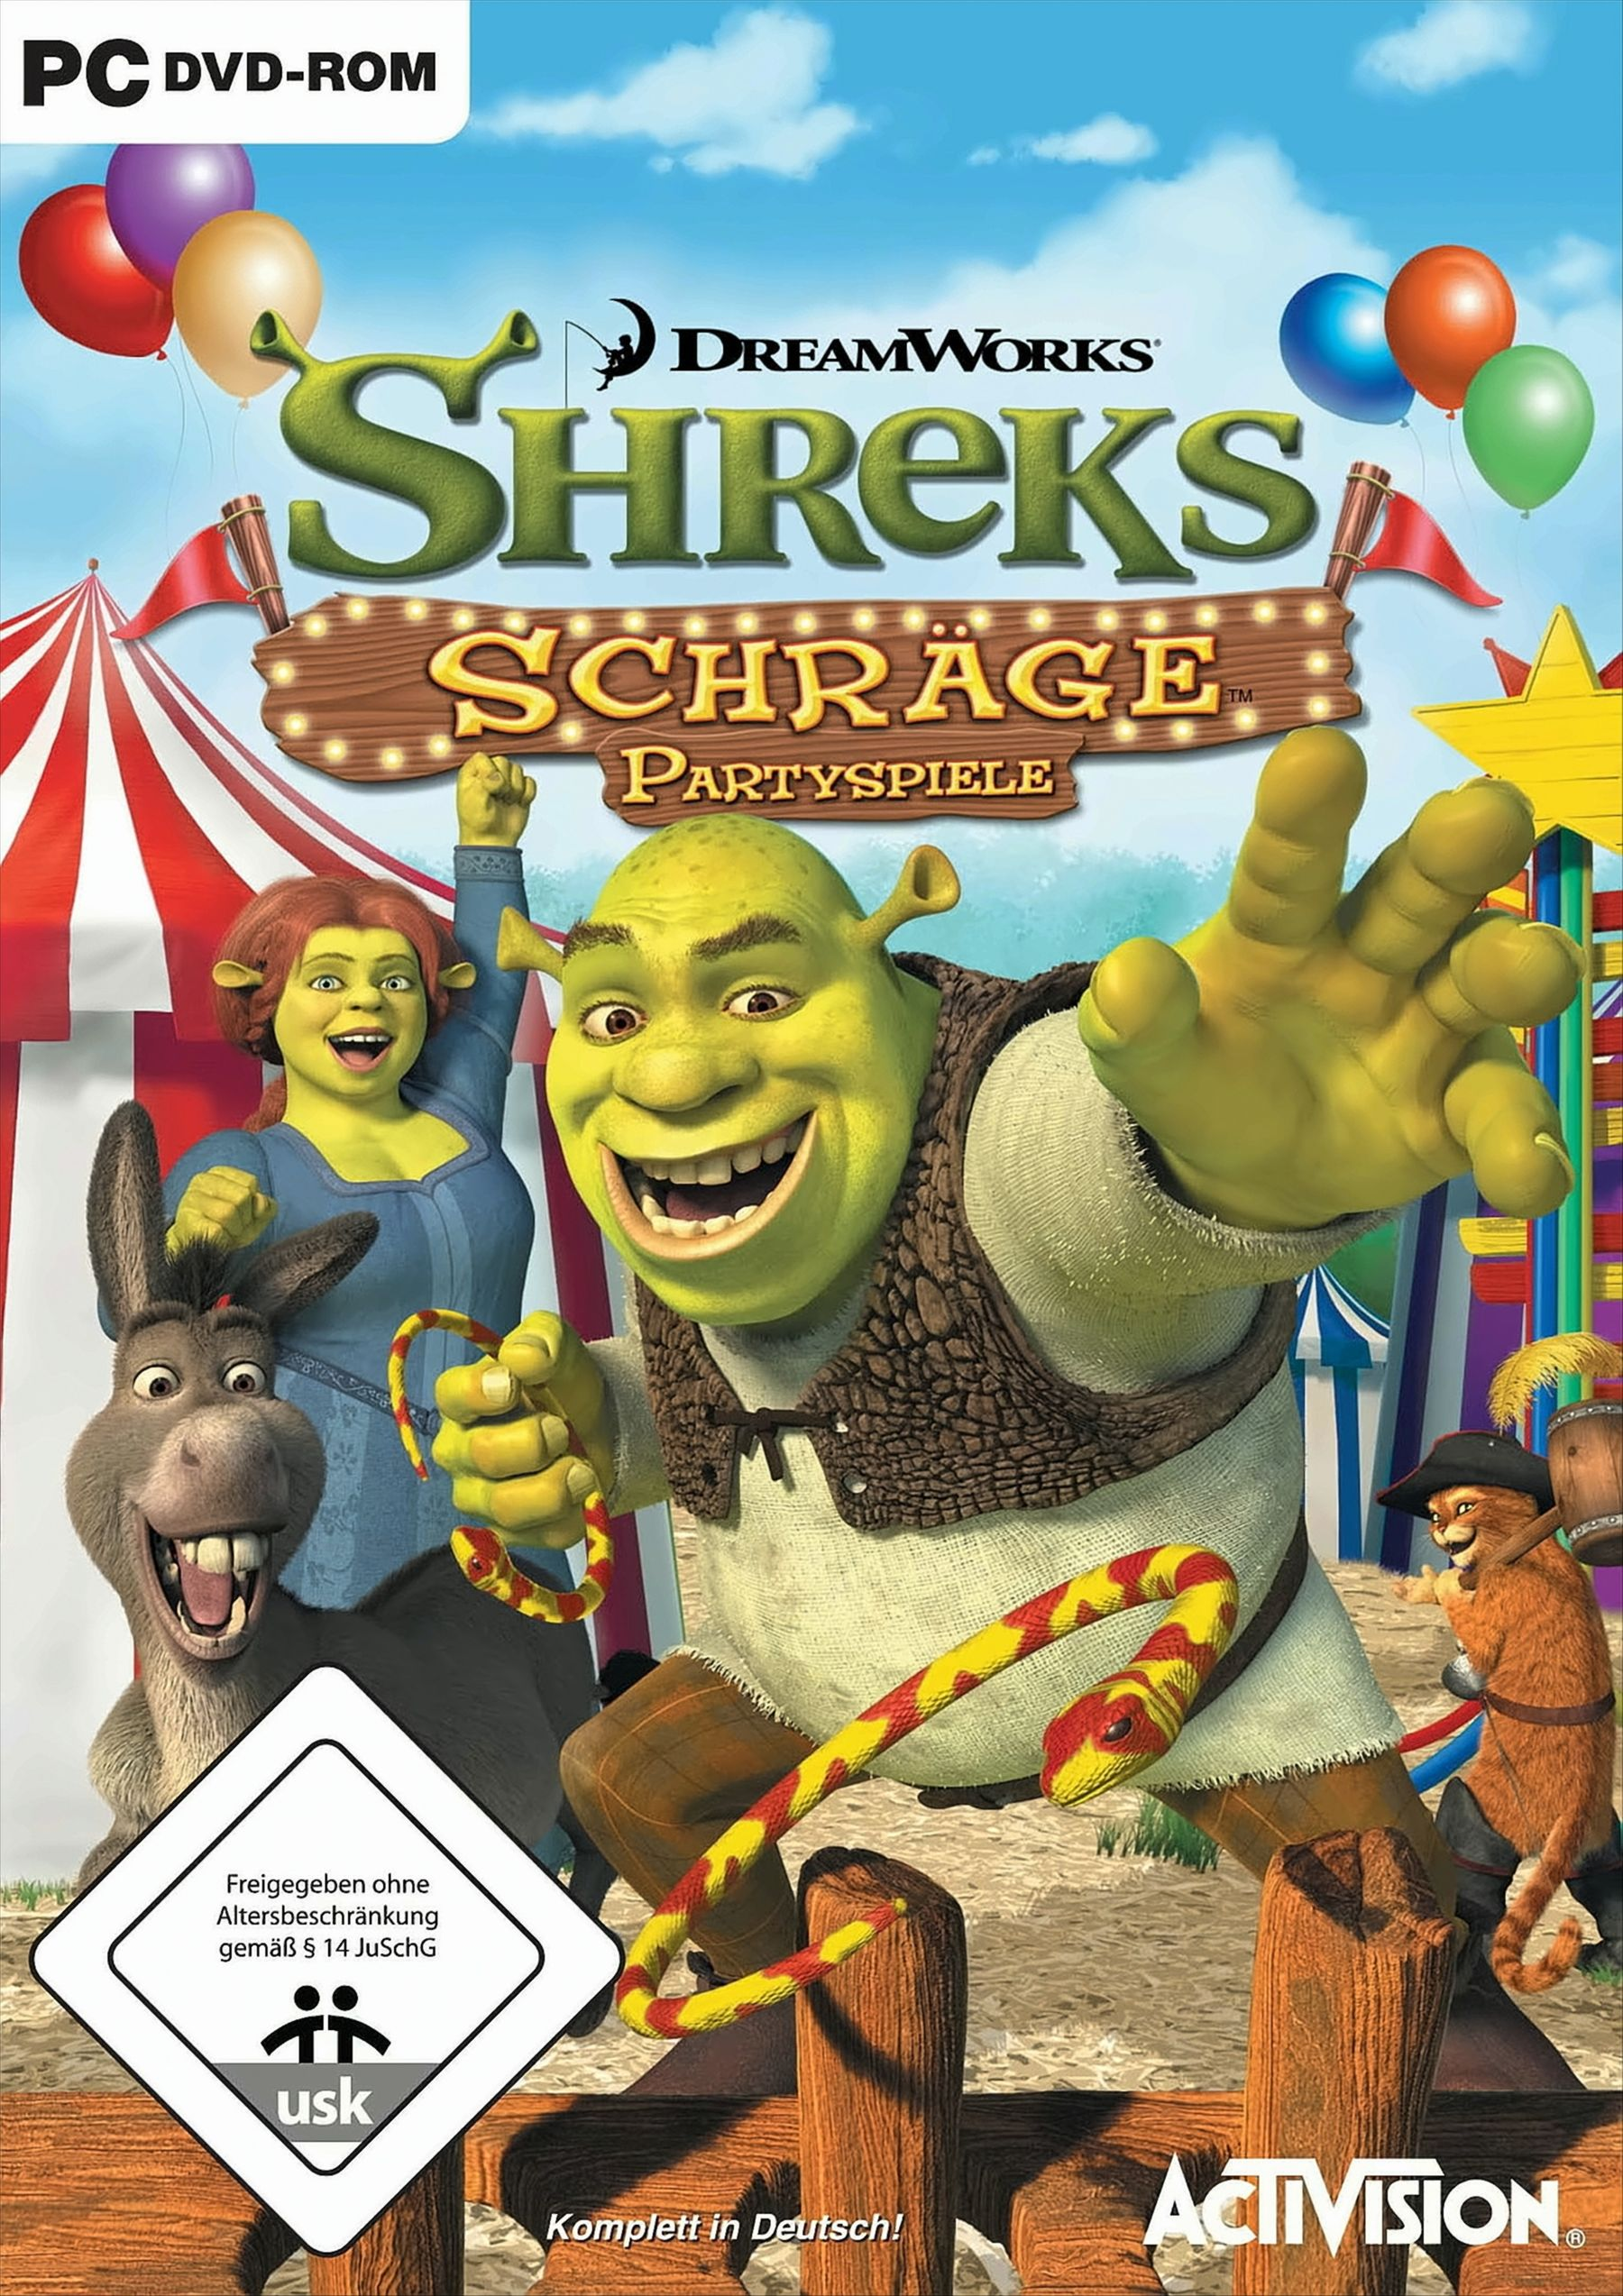 Partyspiele - Shreks schräge [PC]